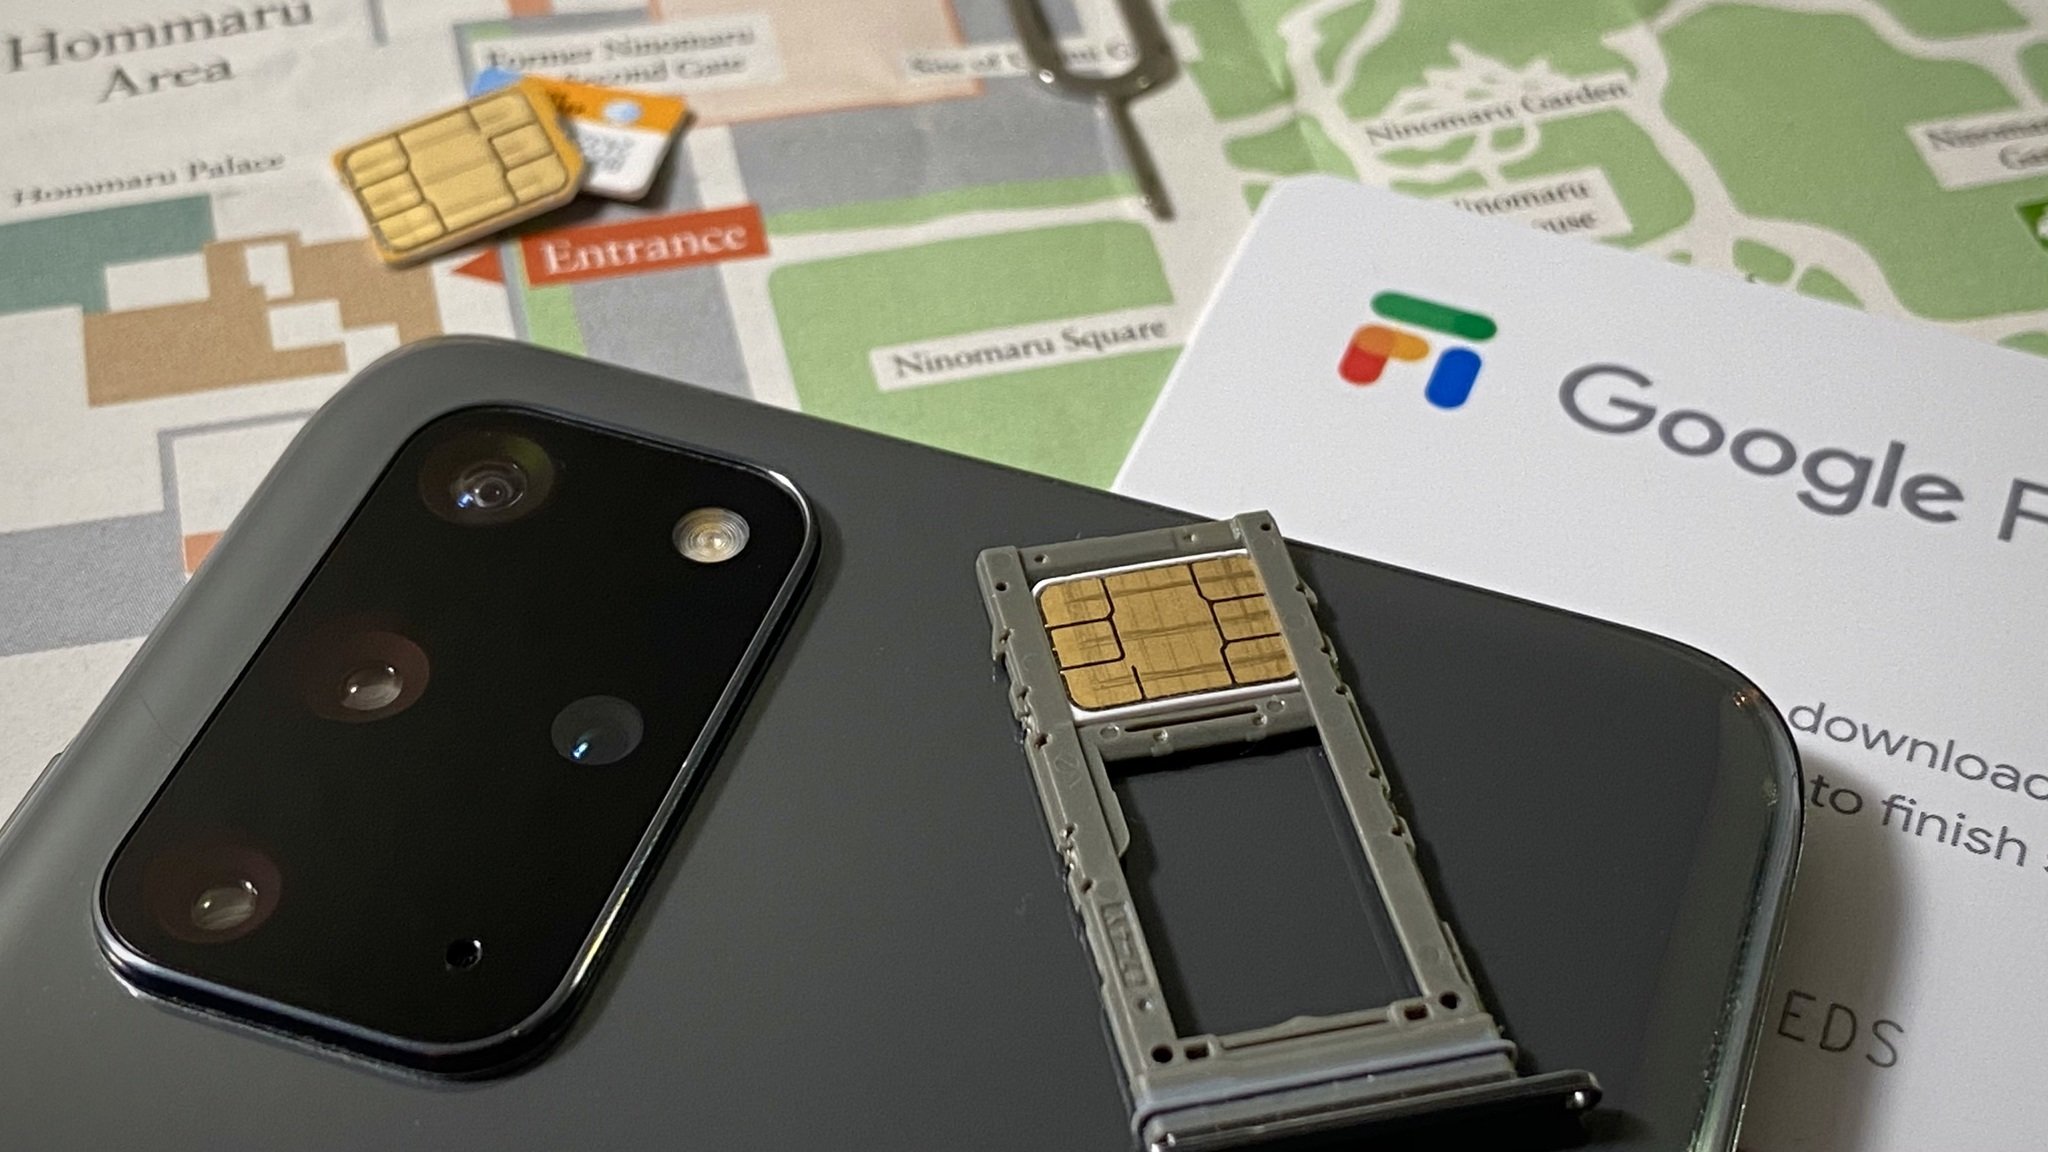 Google Fi SIM card on a map